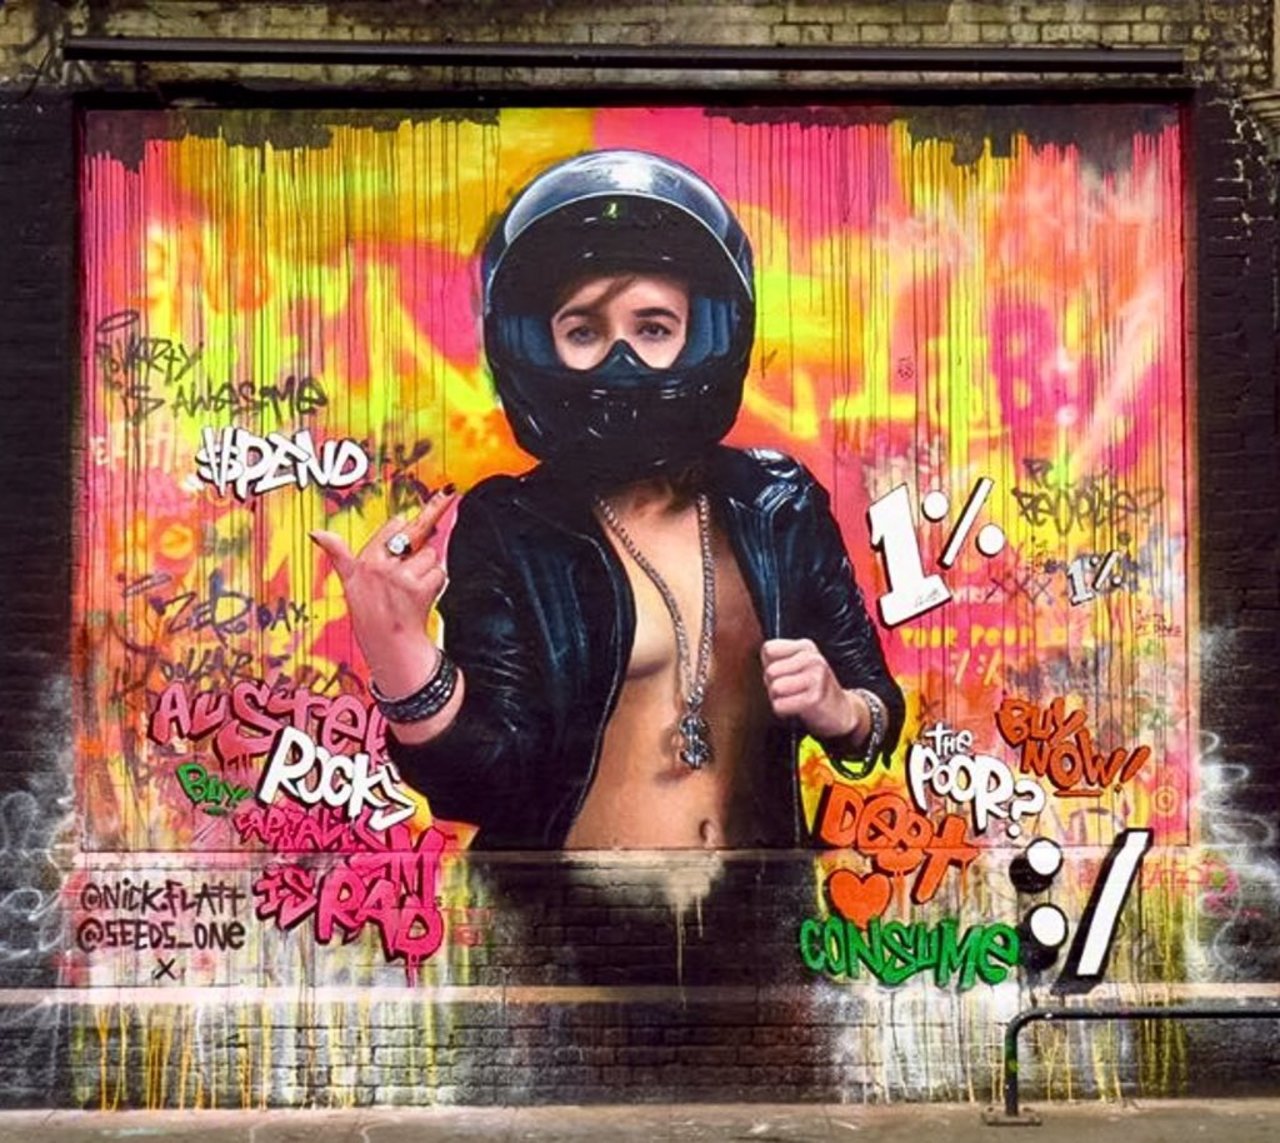 RT @streetartnow: Really like this #streetart from nick flat & seeds1 in #London Very cool! #graffiti #art #urbanart https://t.co/lKDlB6pS0s